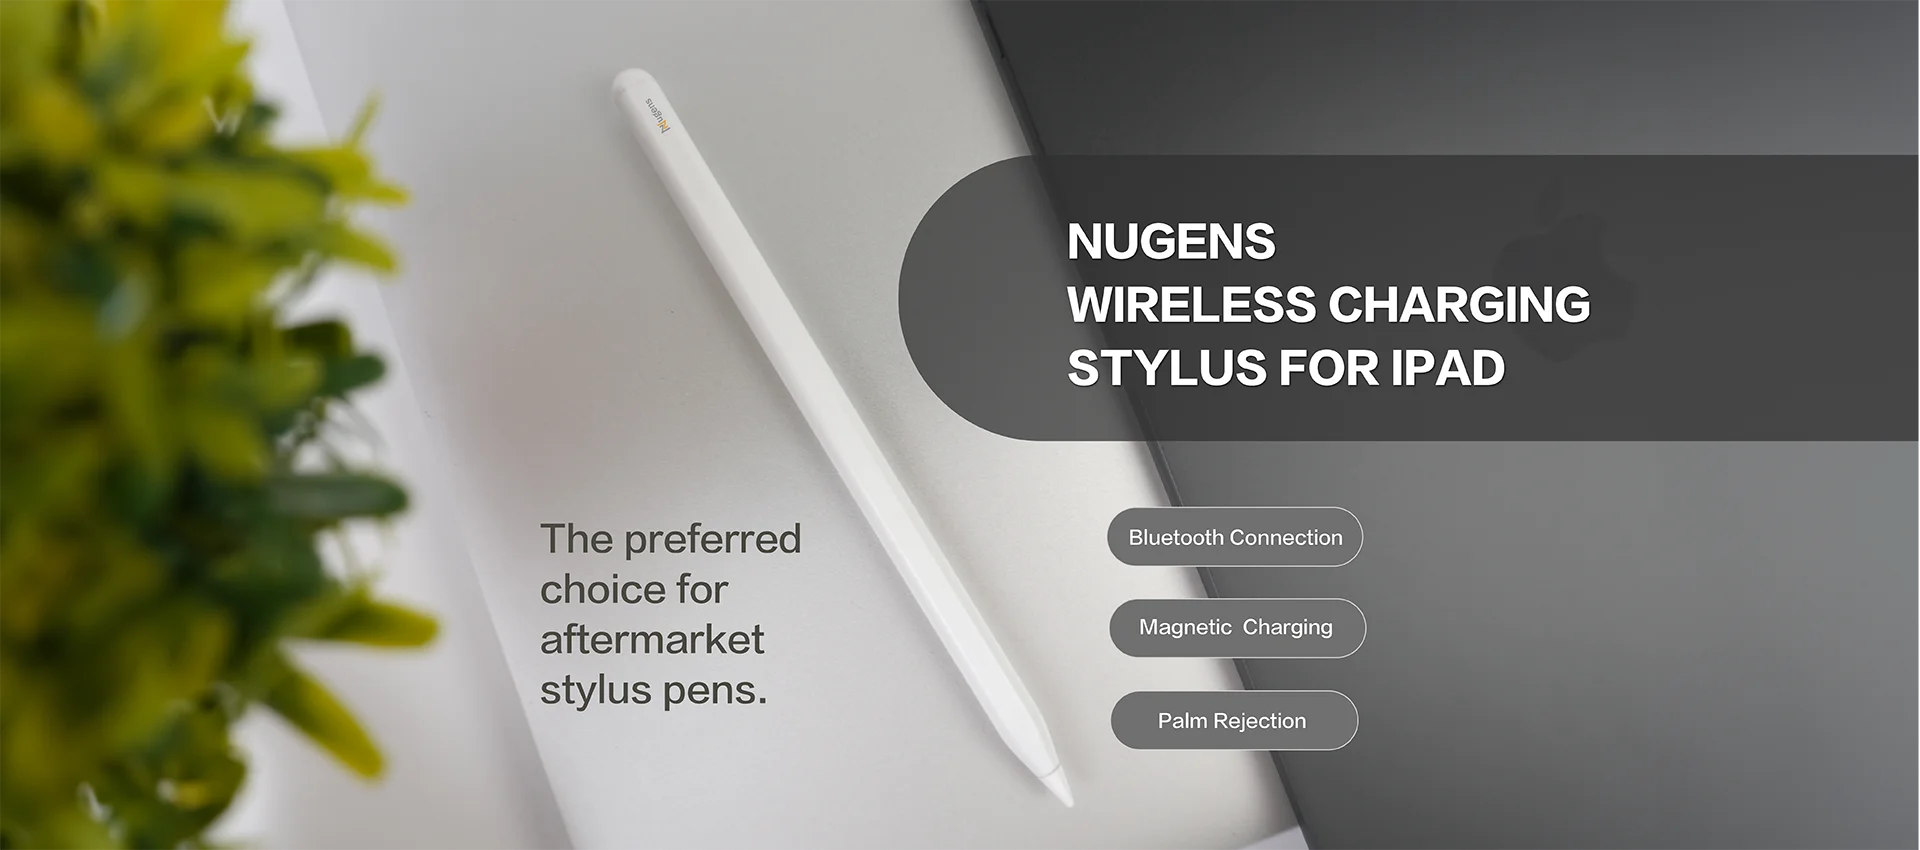 Nugens Wireless Charging Stylus for iPad Banner-Desktop